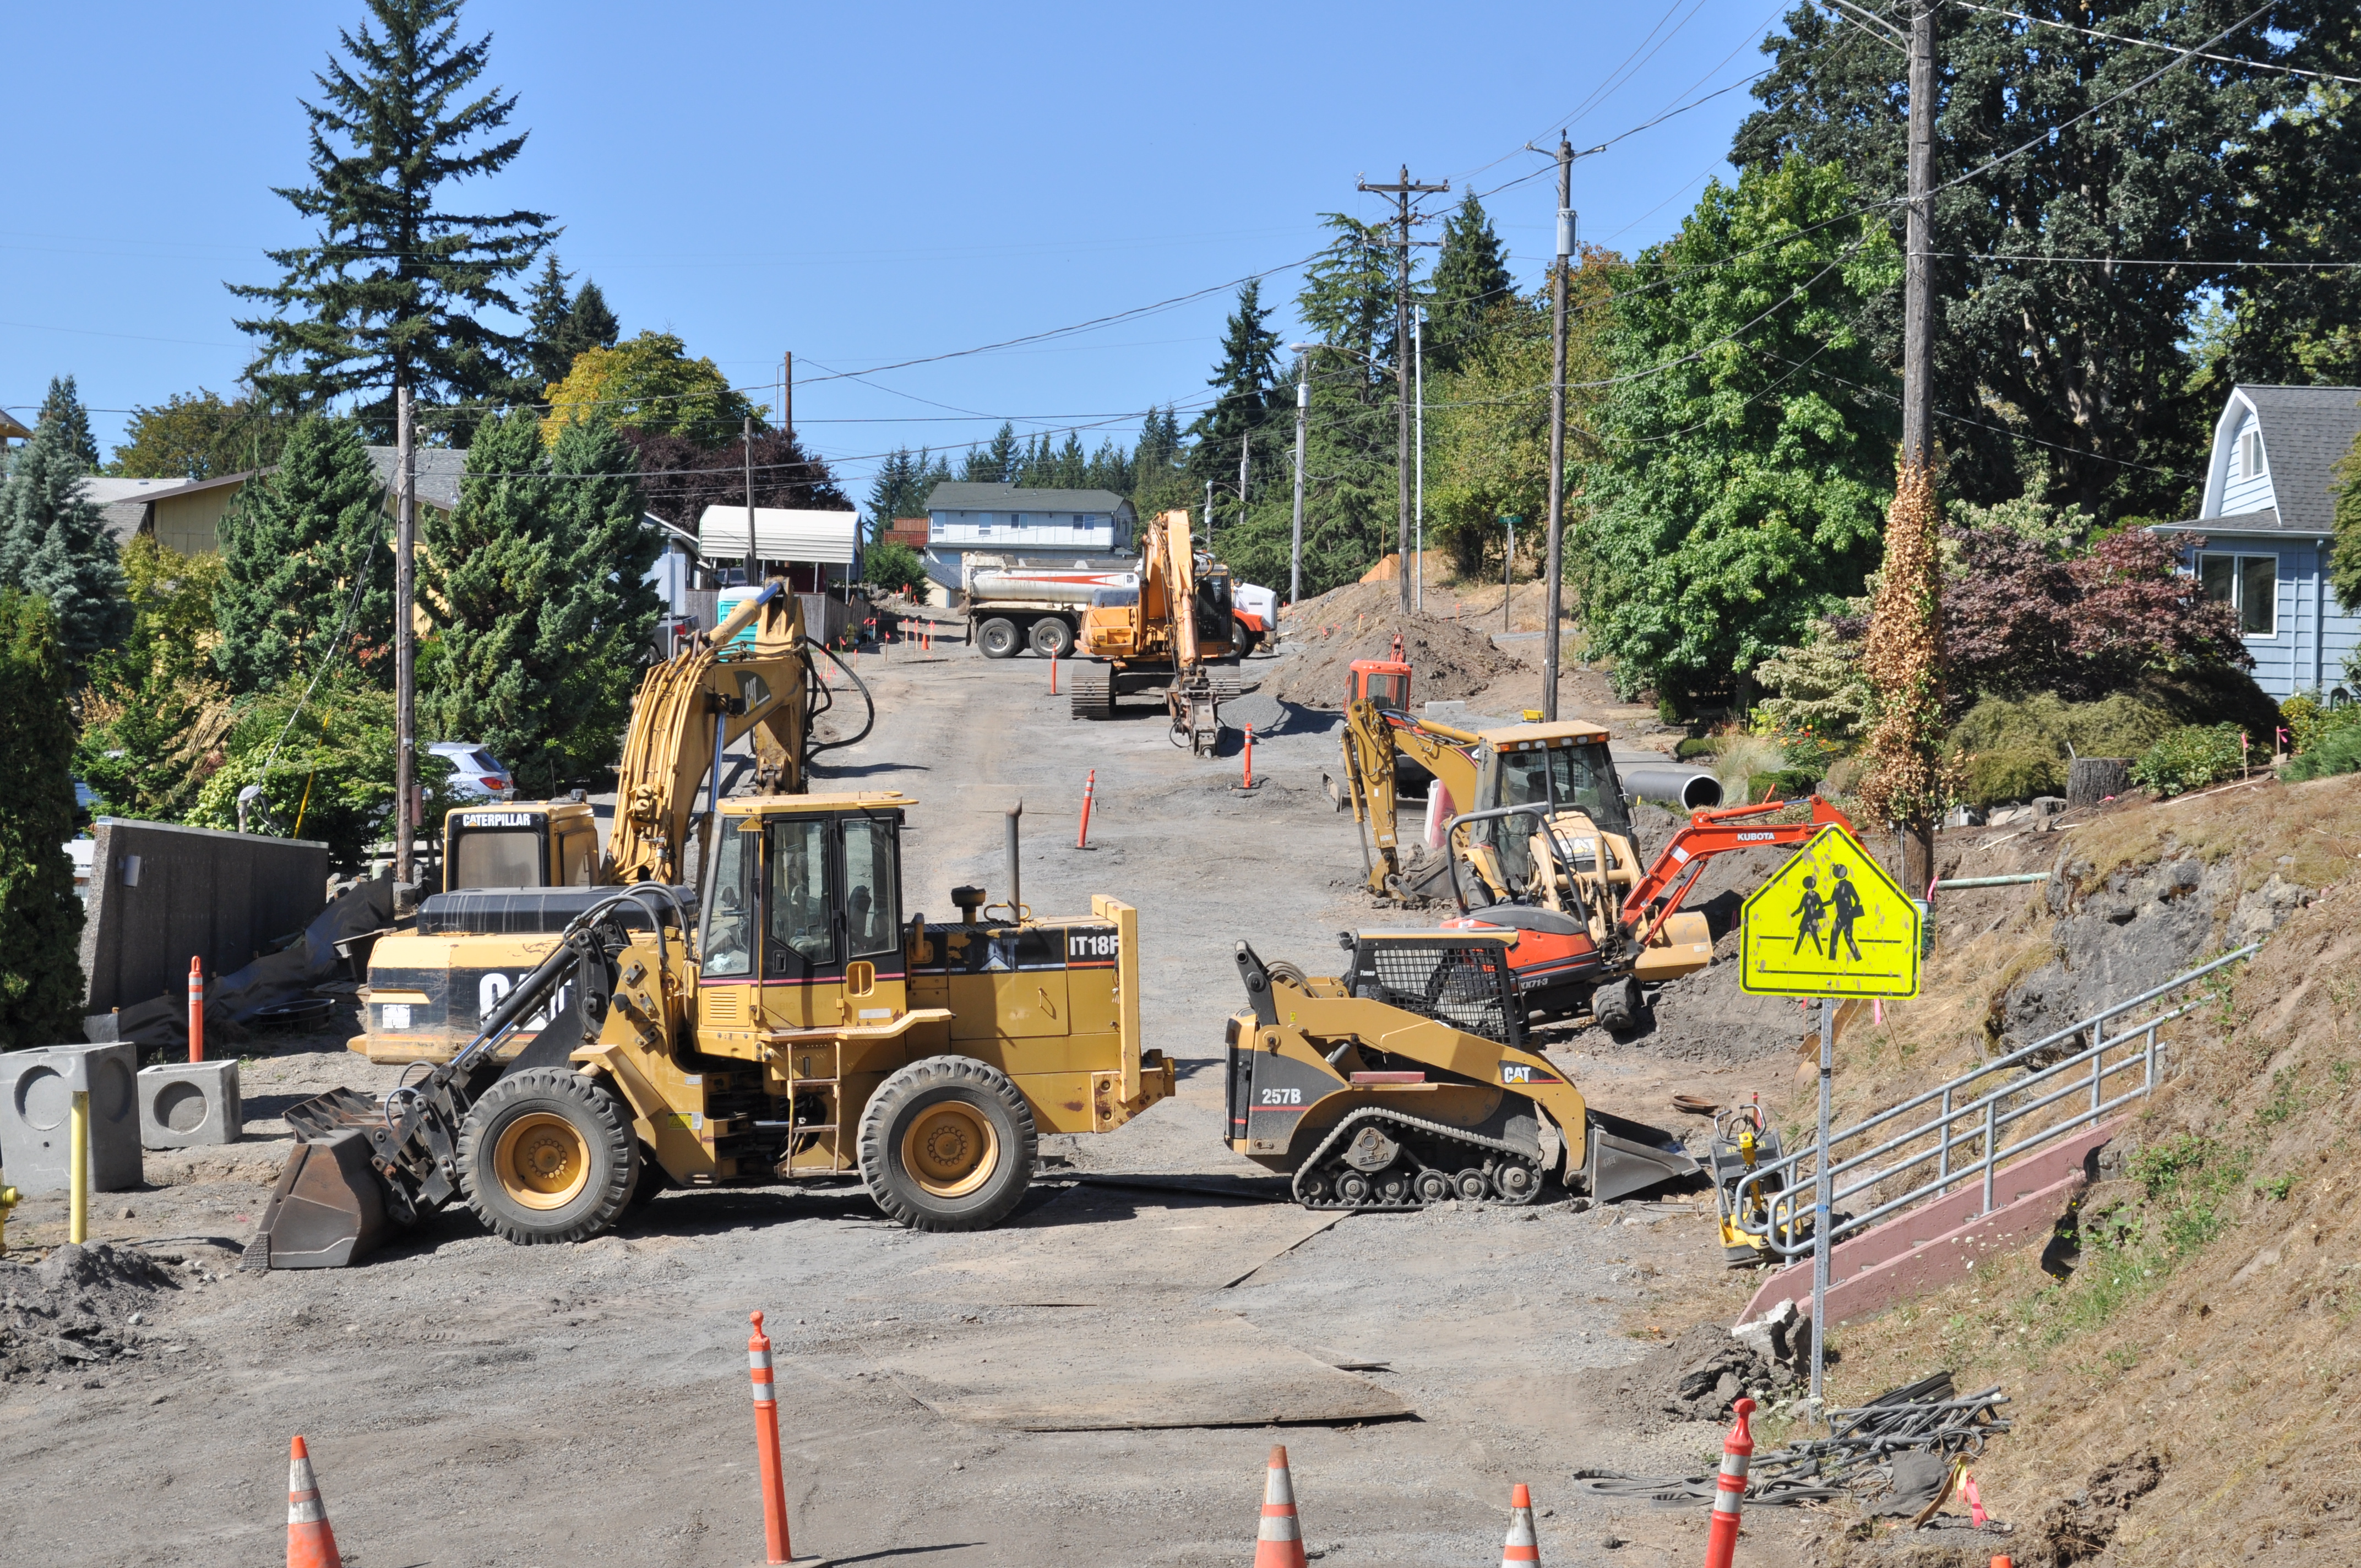 File:Kalama, WA - road construction 01.jpg - Wikimedia Commons